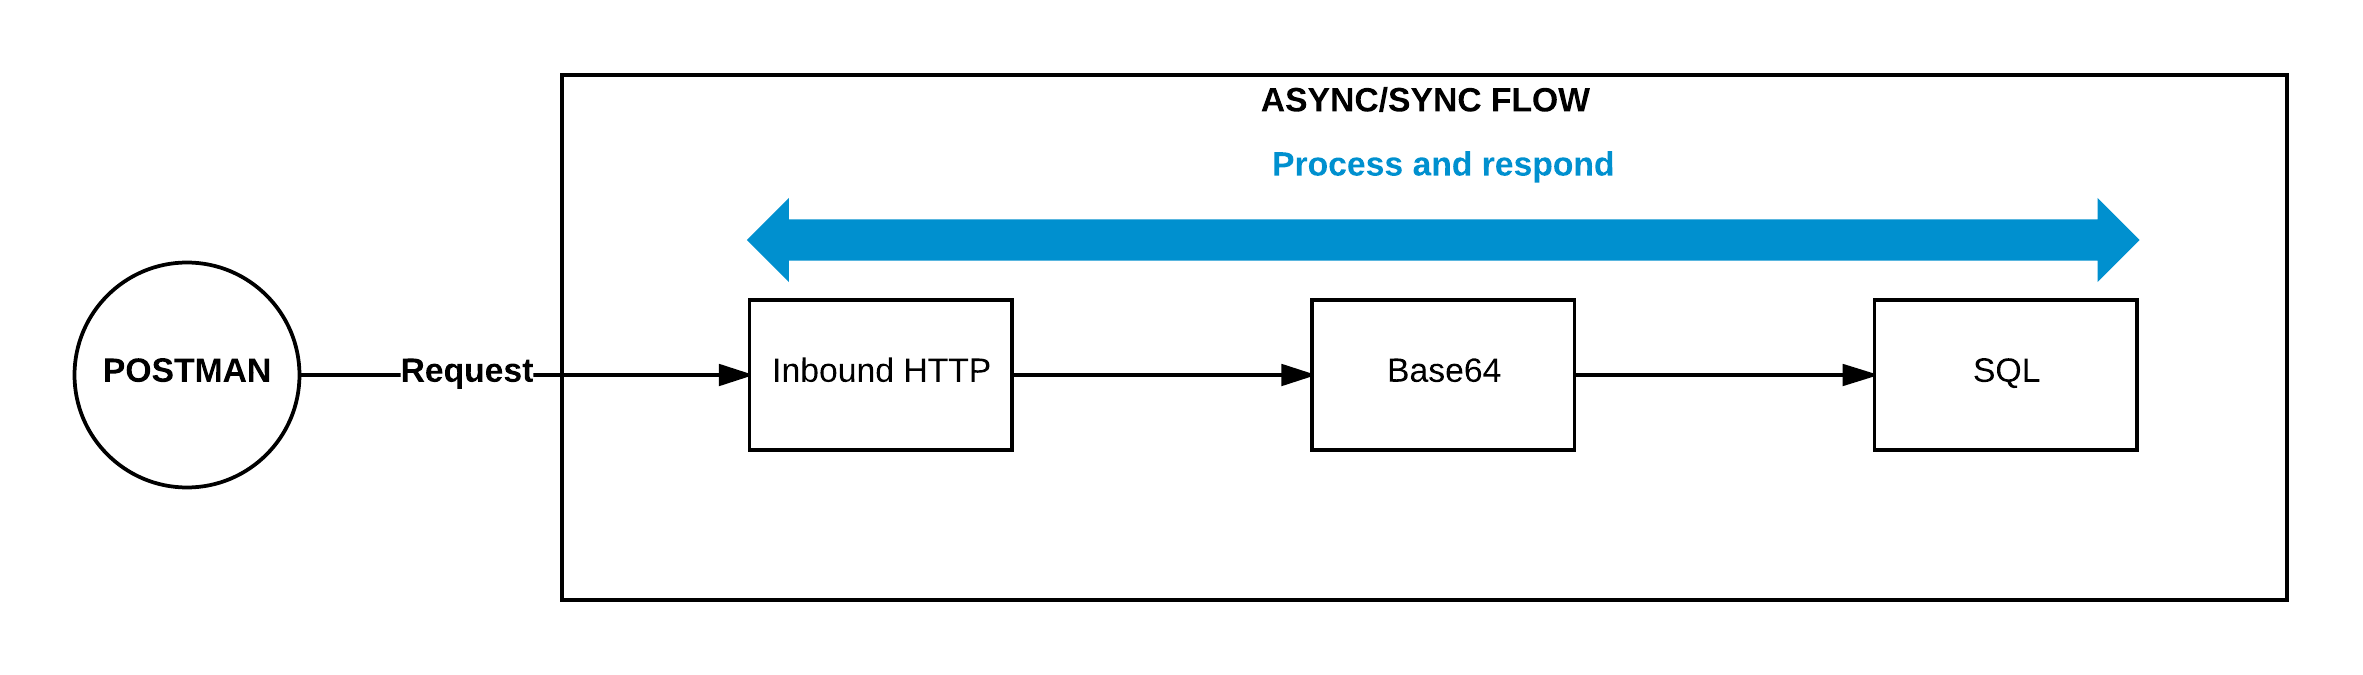 Inbound HTTP component explanation